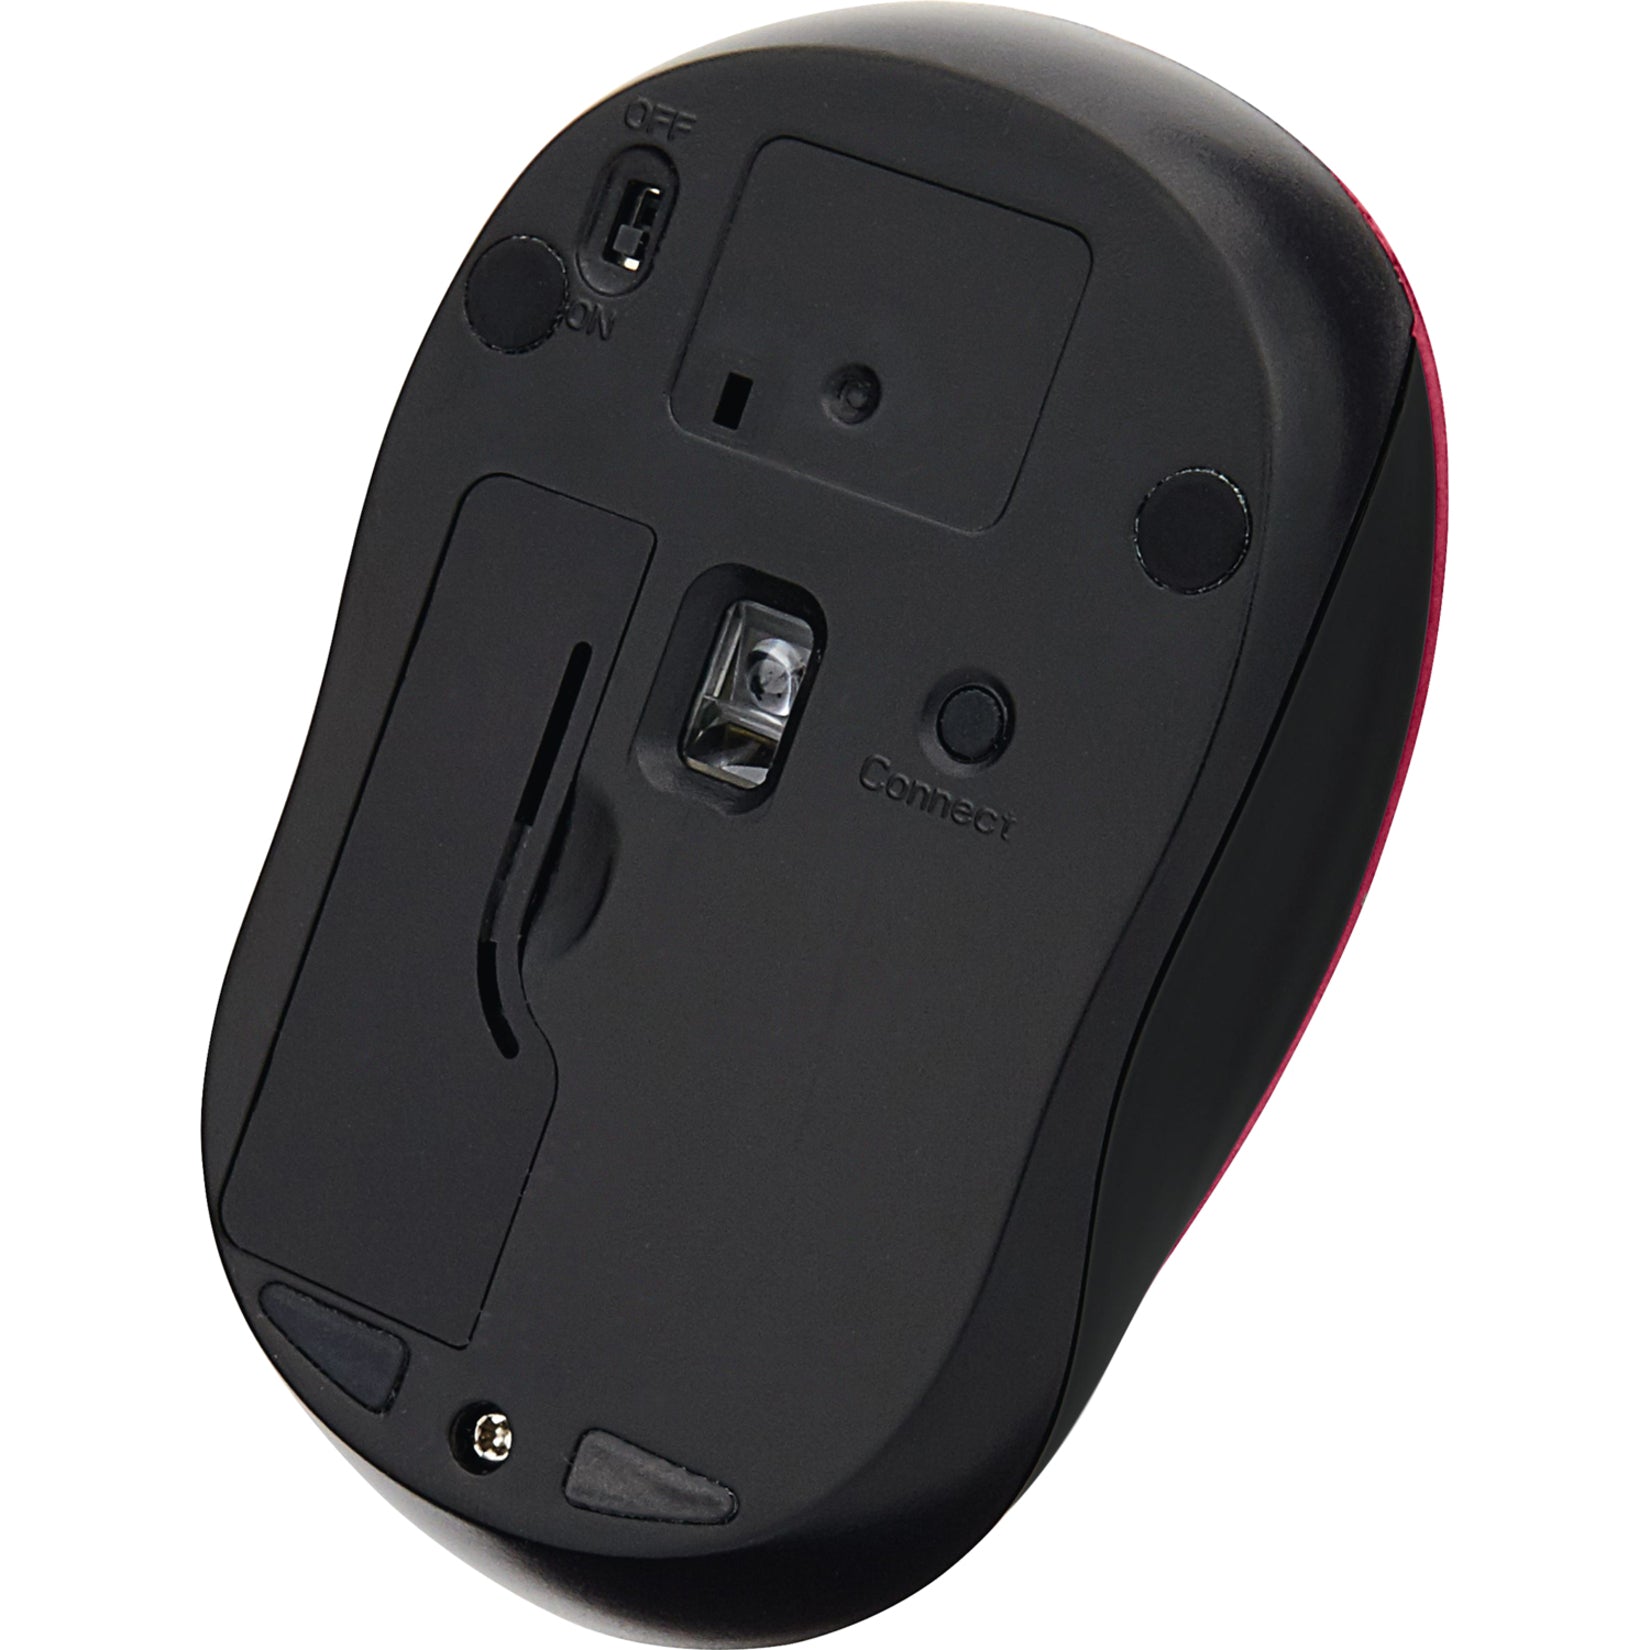 Verbatim 99780 Silent Wireless Blue LED Mouse, Red/Black, for PCs & Macs